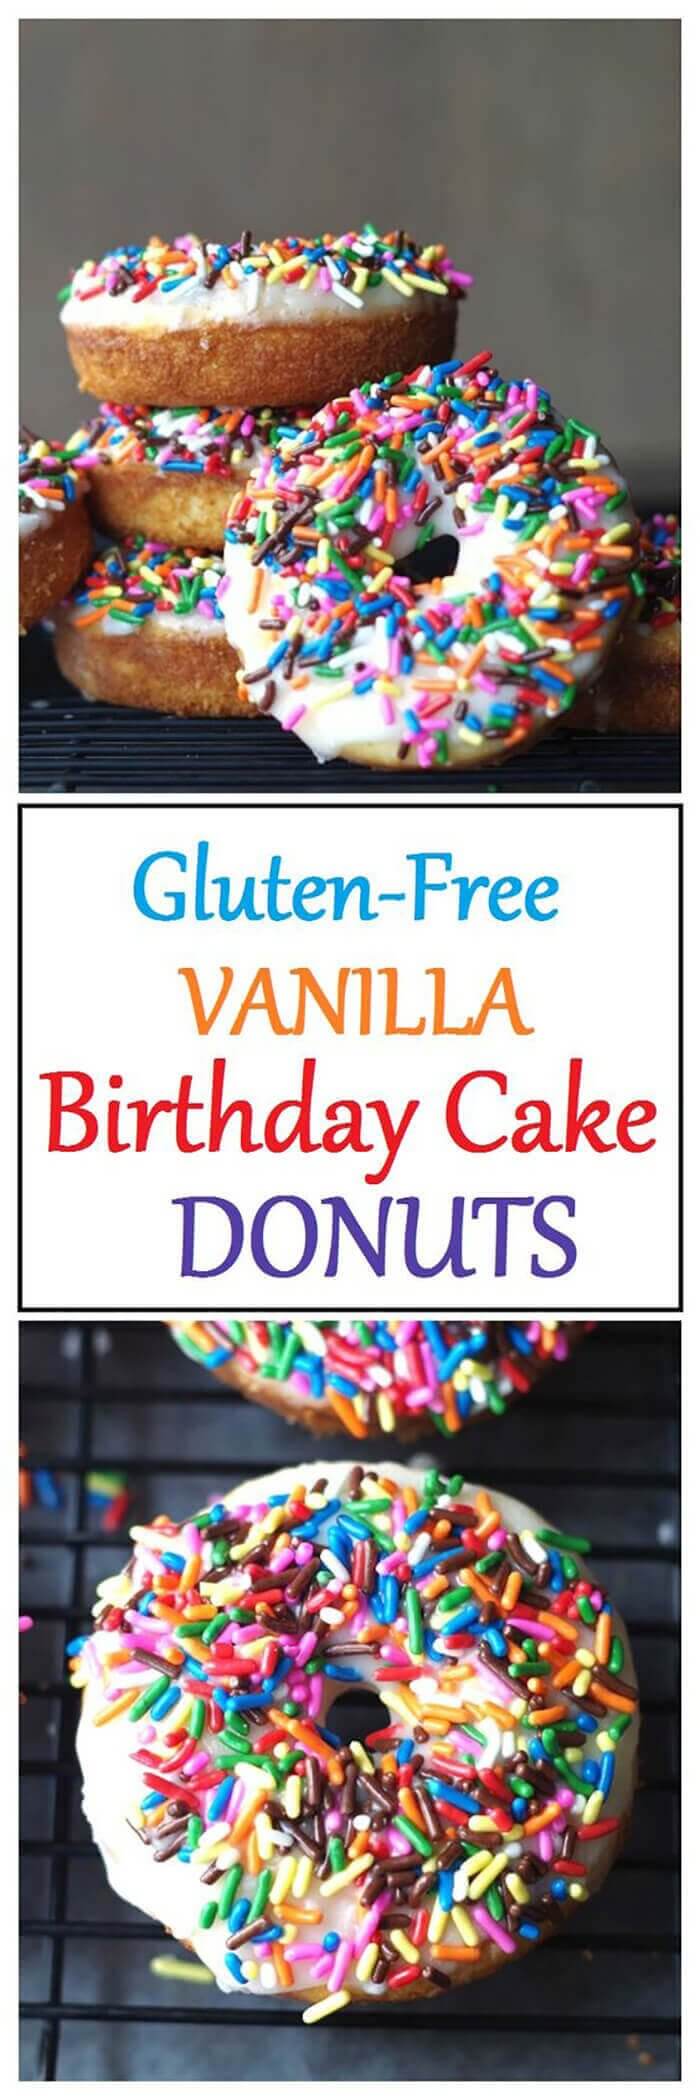 Gluten-Free Vanilla Birthday Cake Donuts (11 Ingredients)